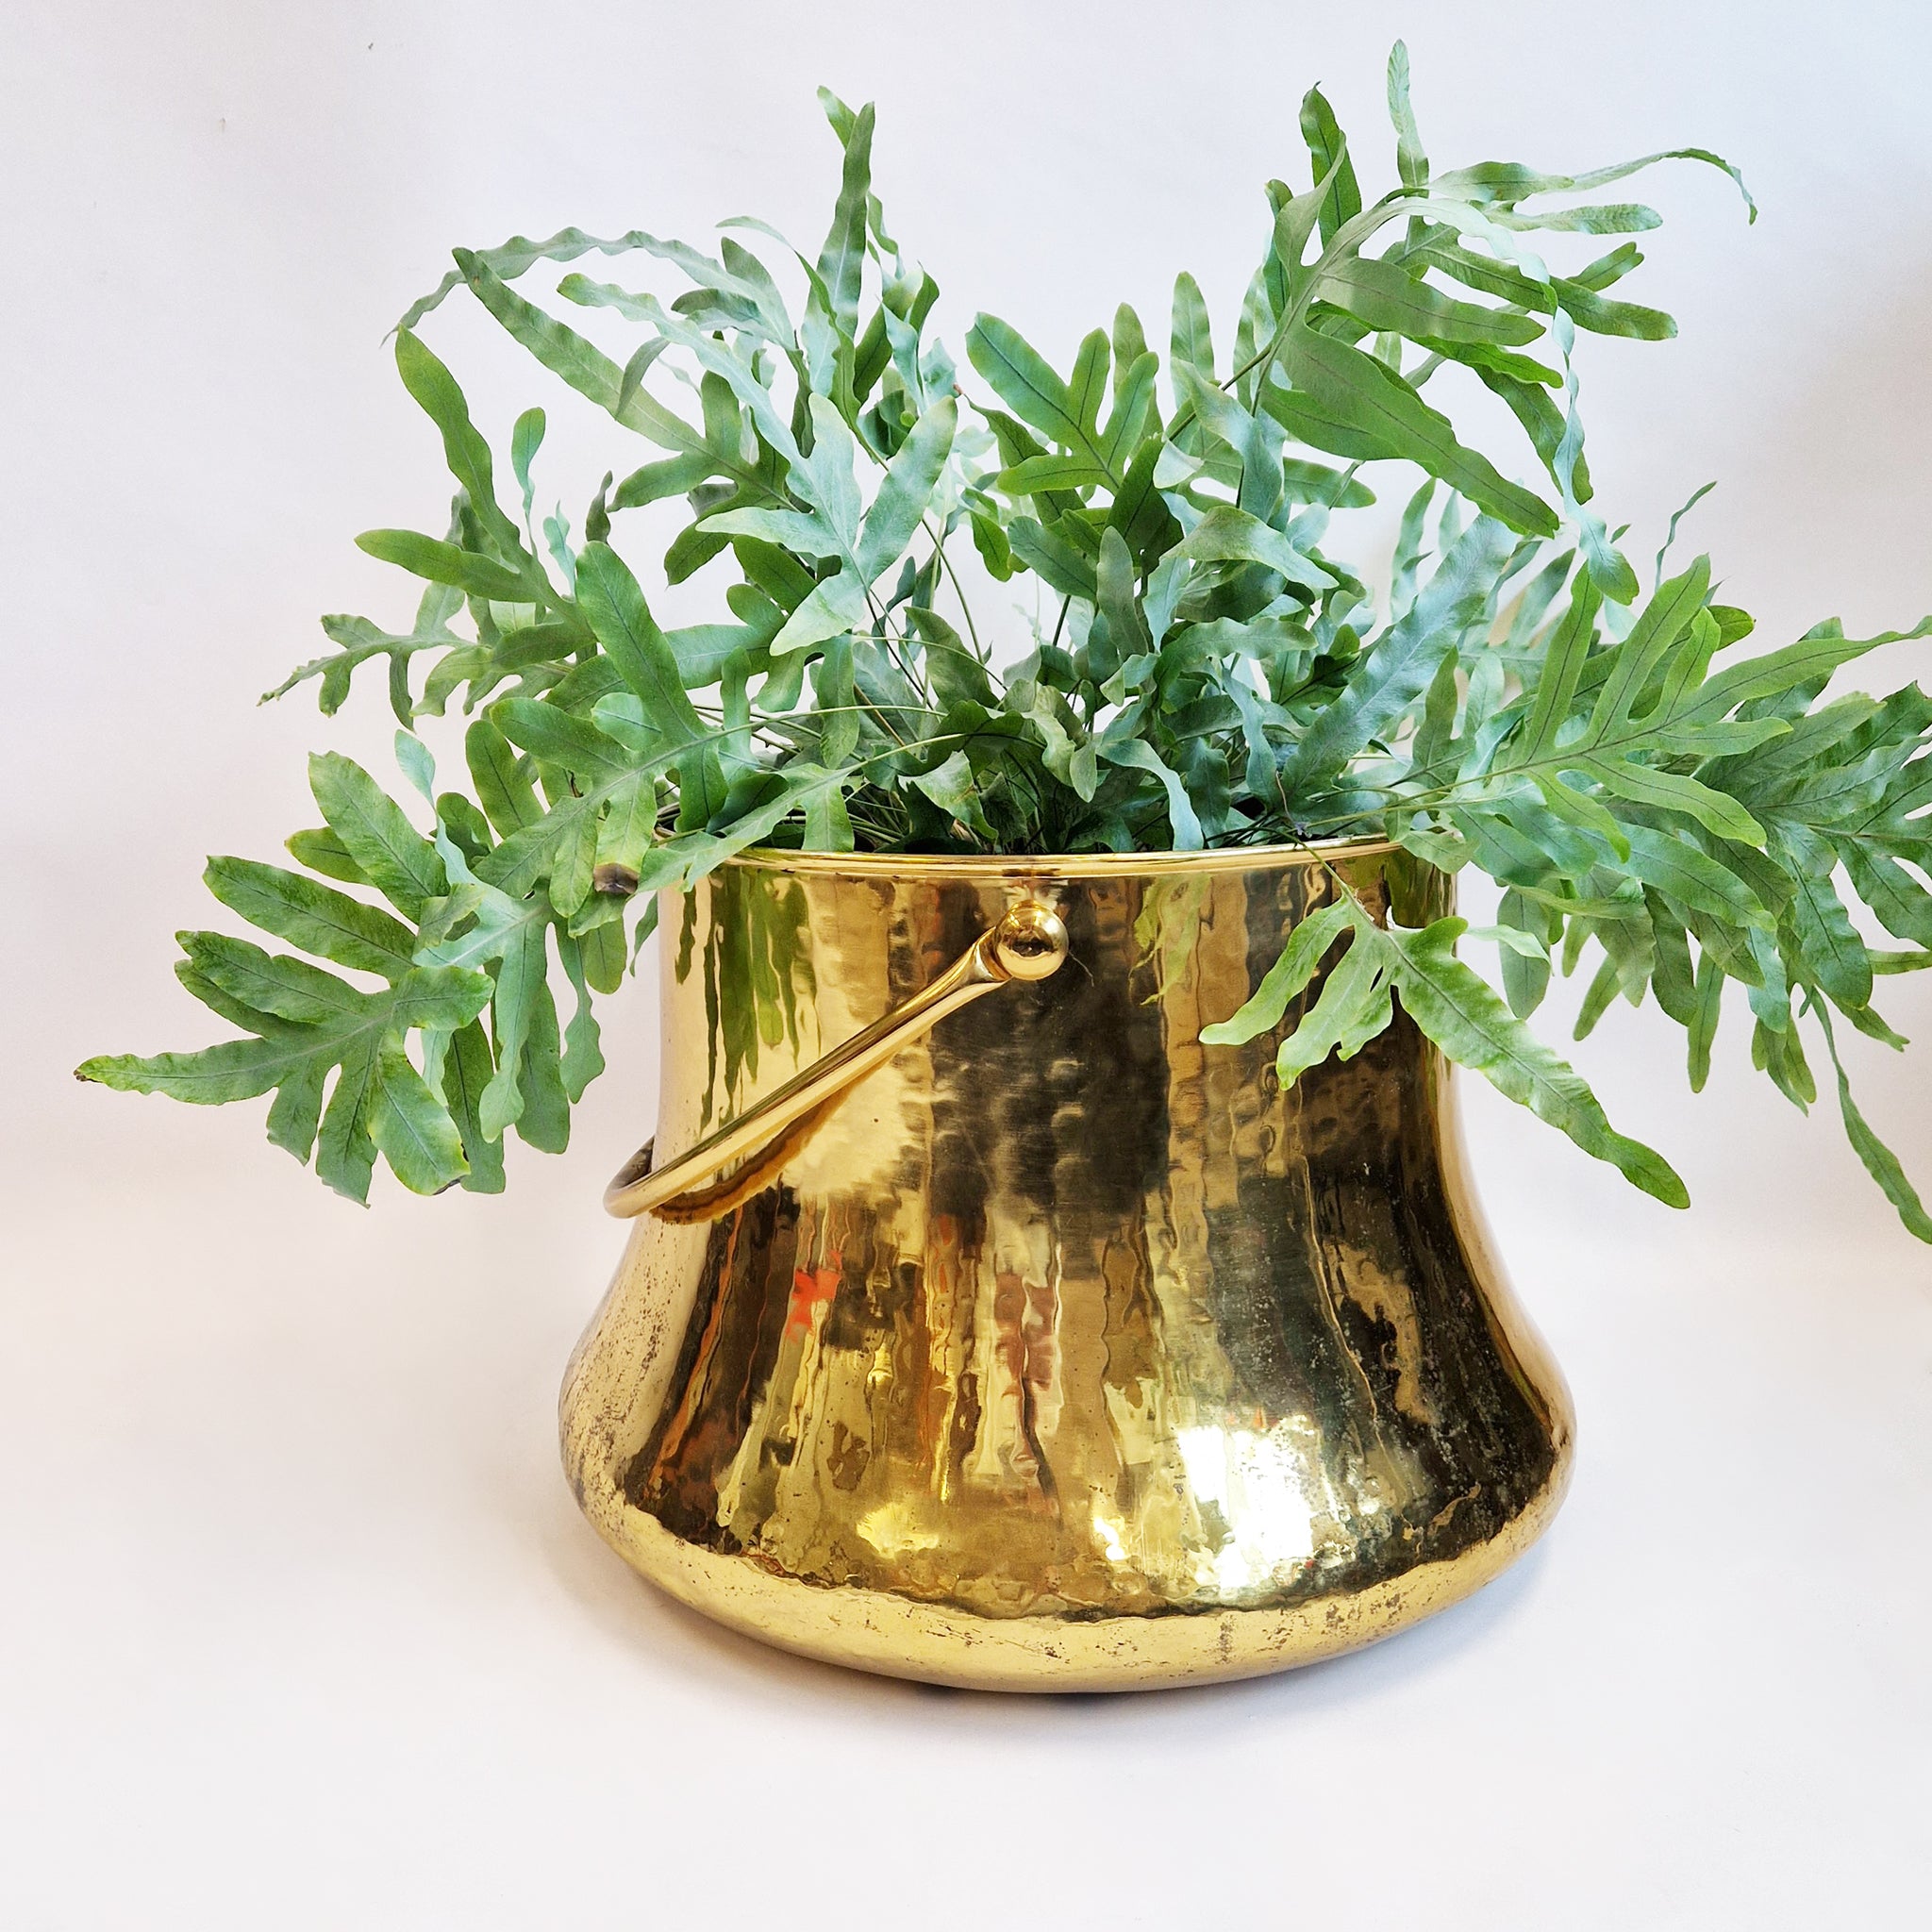 Vintage Italian XL brass cauldron